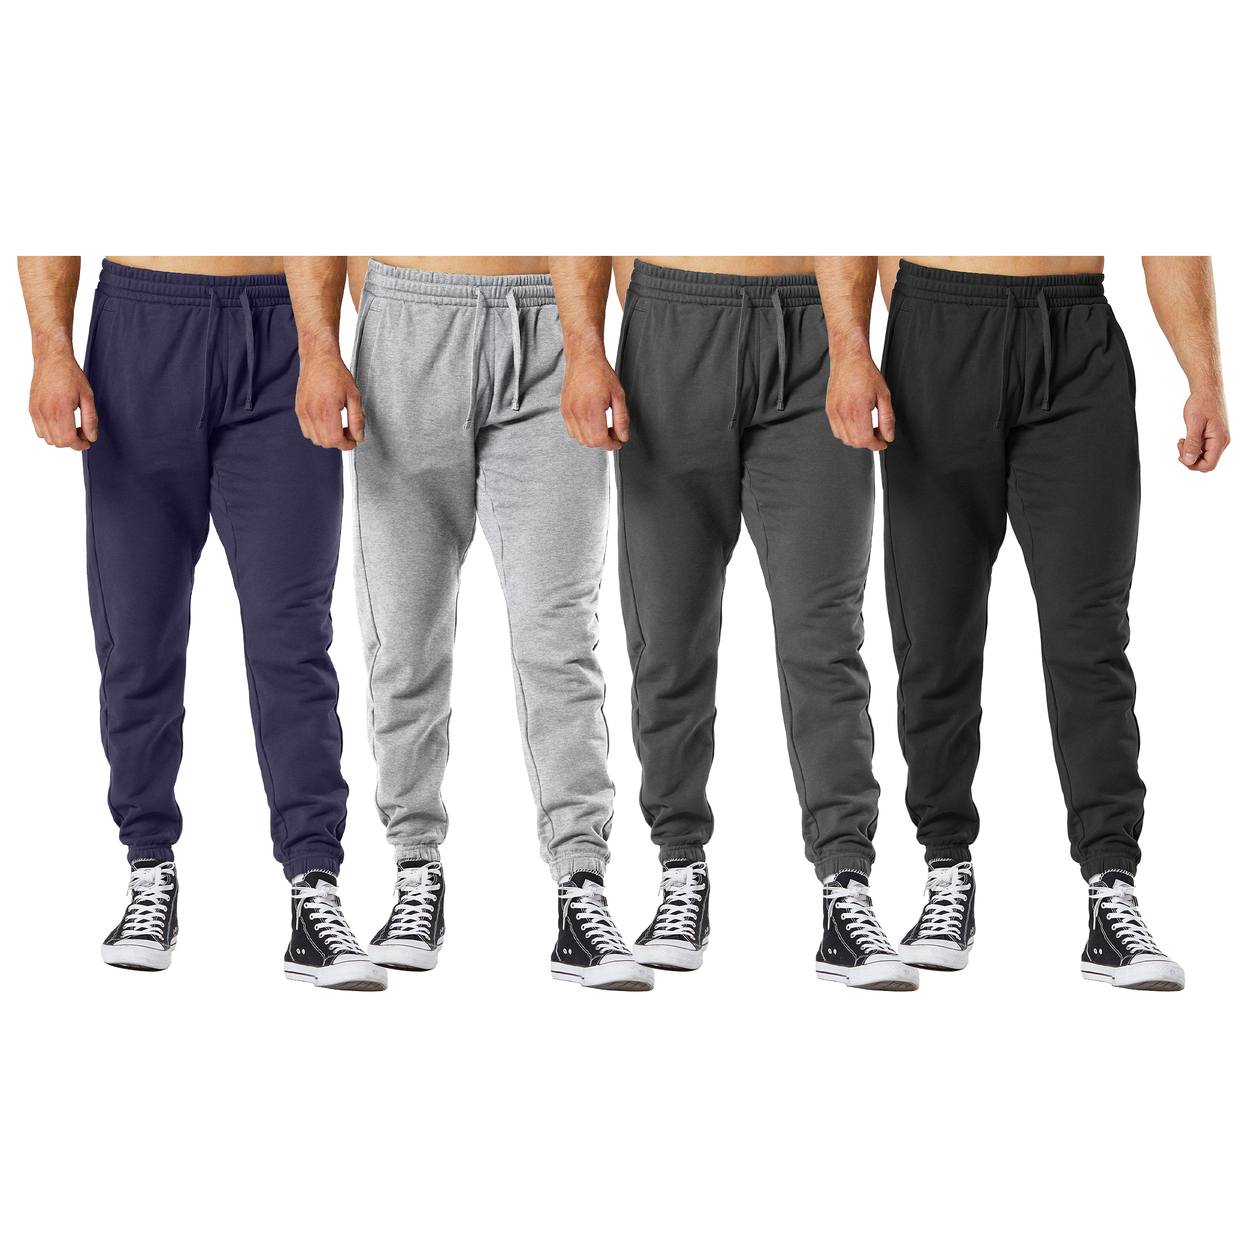 Men's Ultra-Soft Cozy Winter Warm Casual Fleece Lined Sweatpants Jogger - Navy, Medium